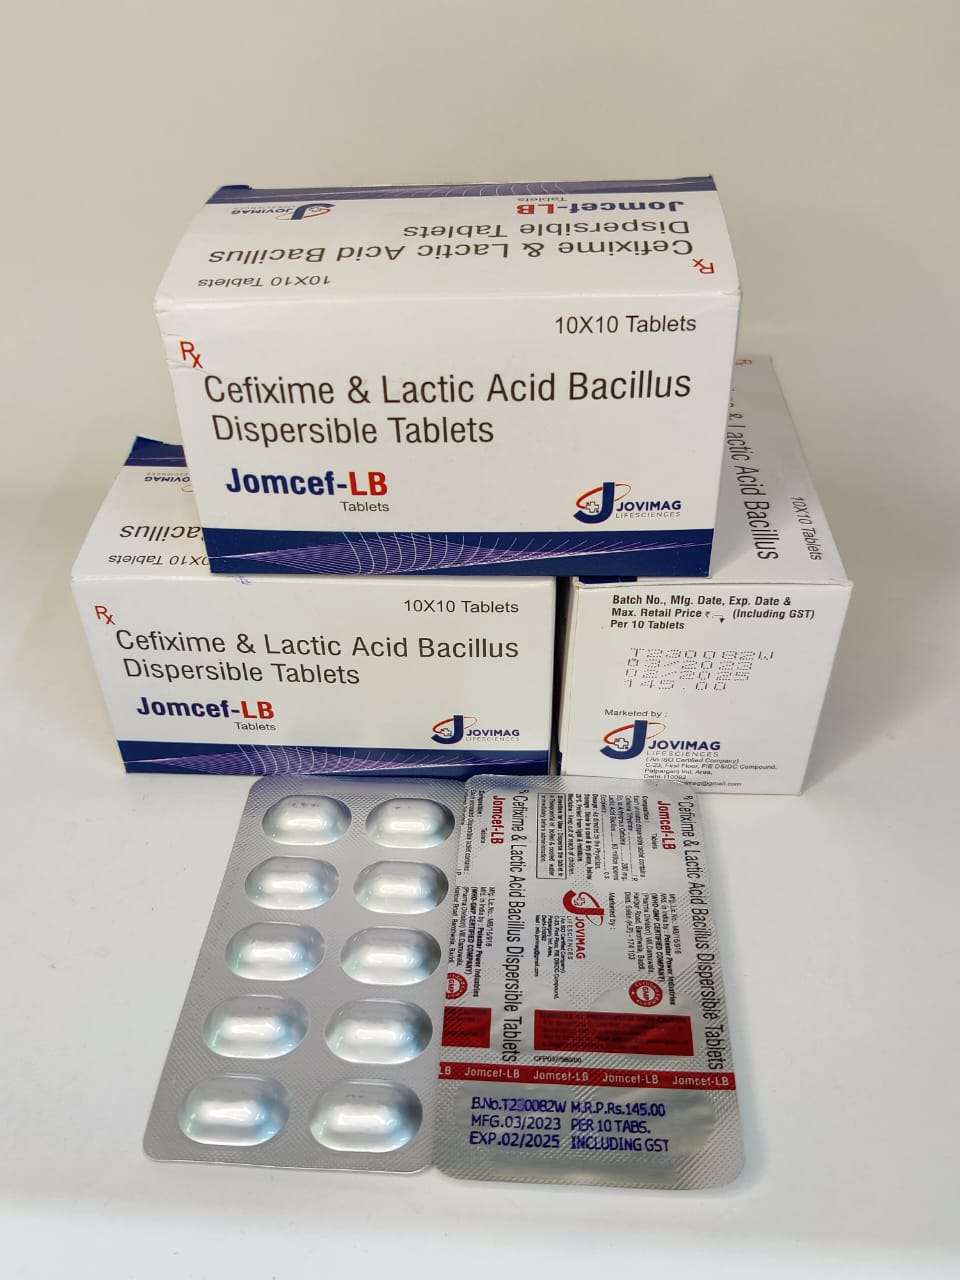 cefixime & lactic acid bacillus 2.5 billion spores dispersible tablet